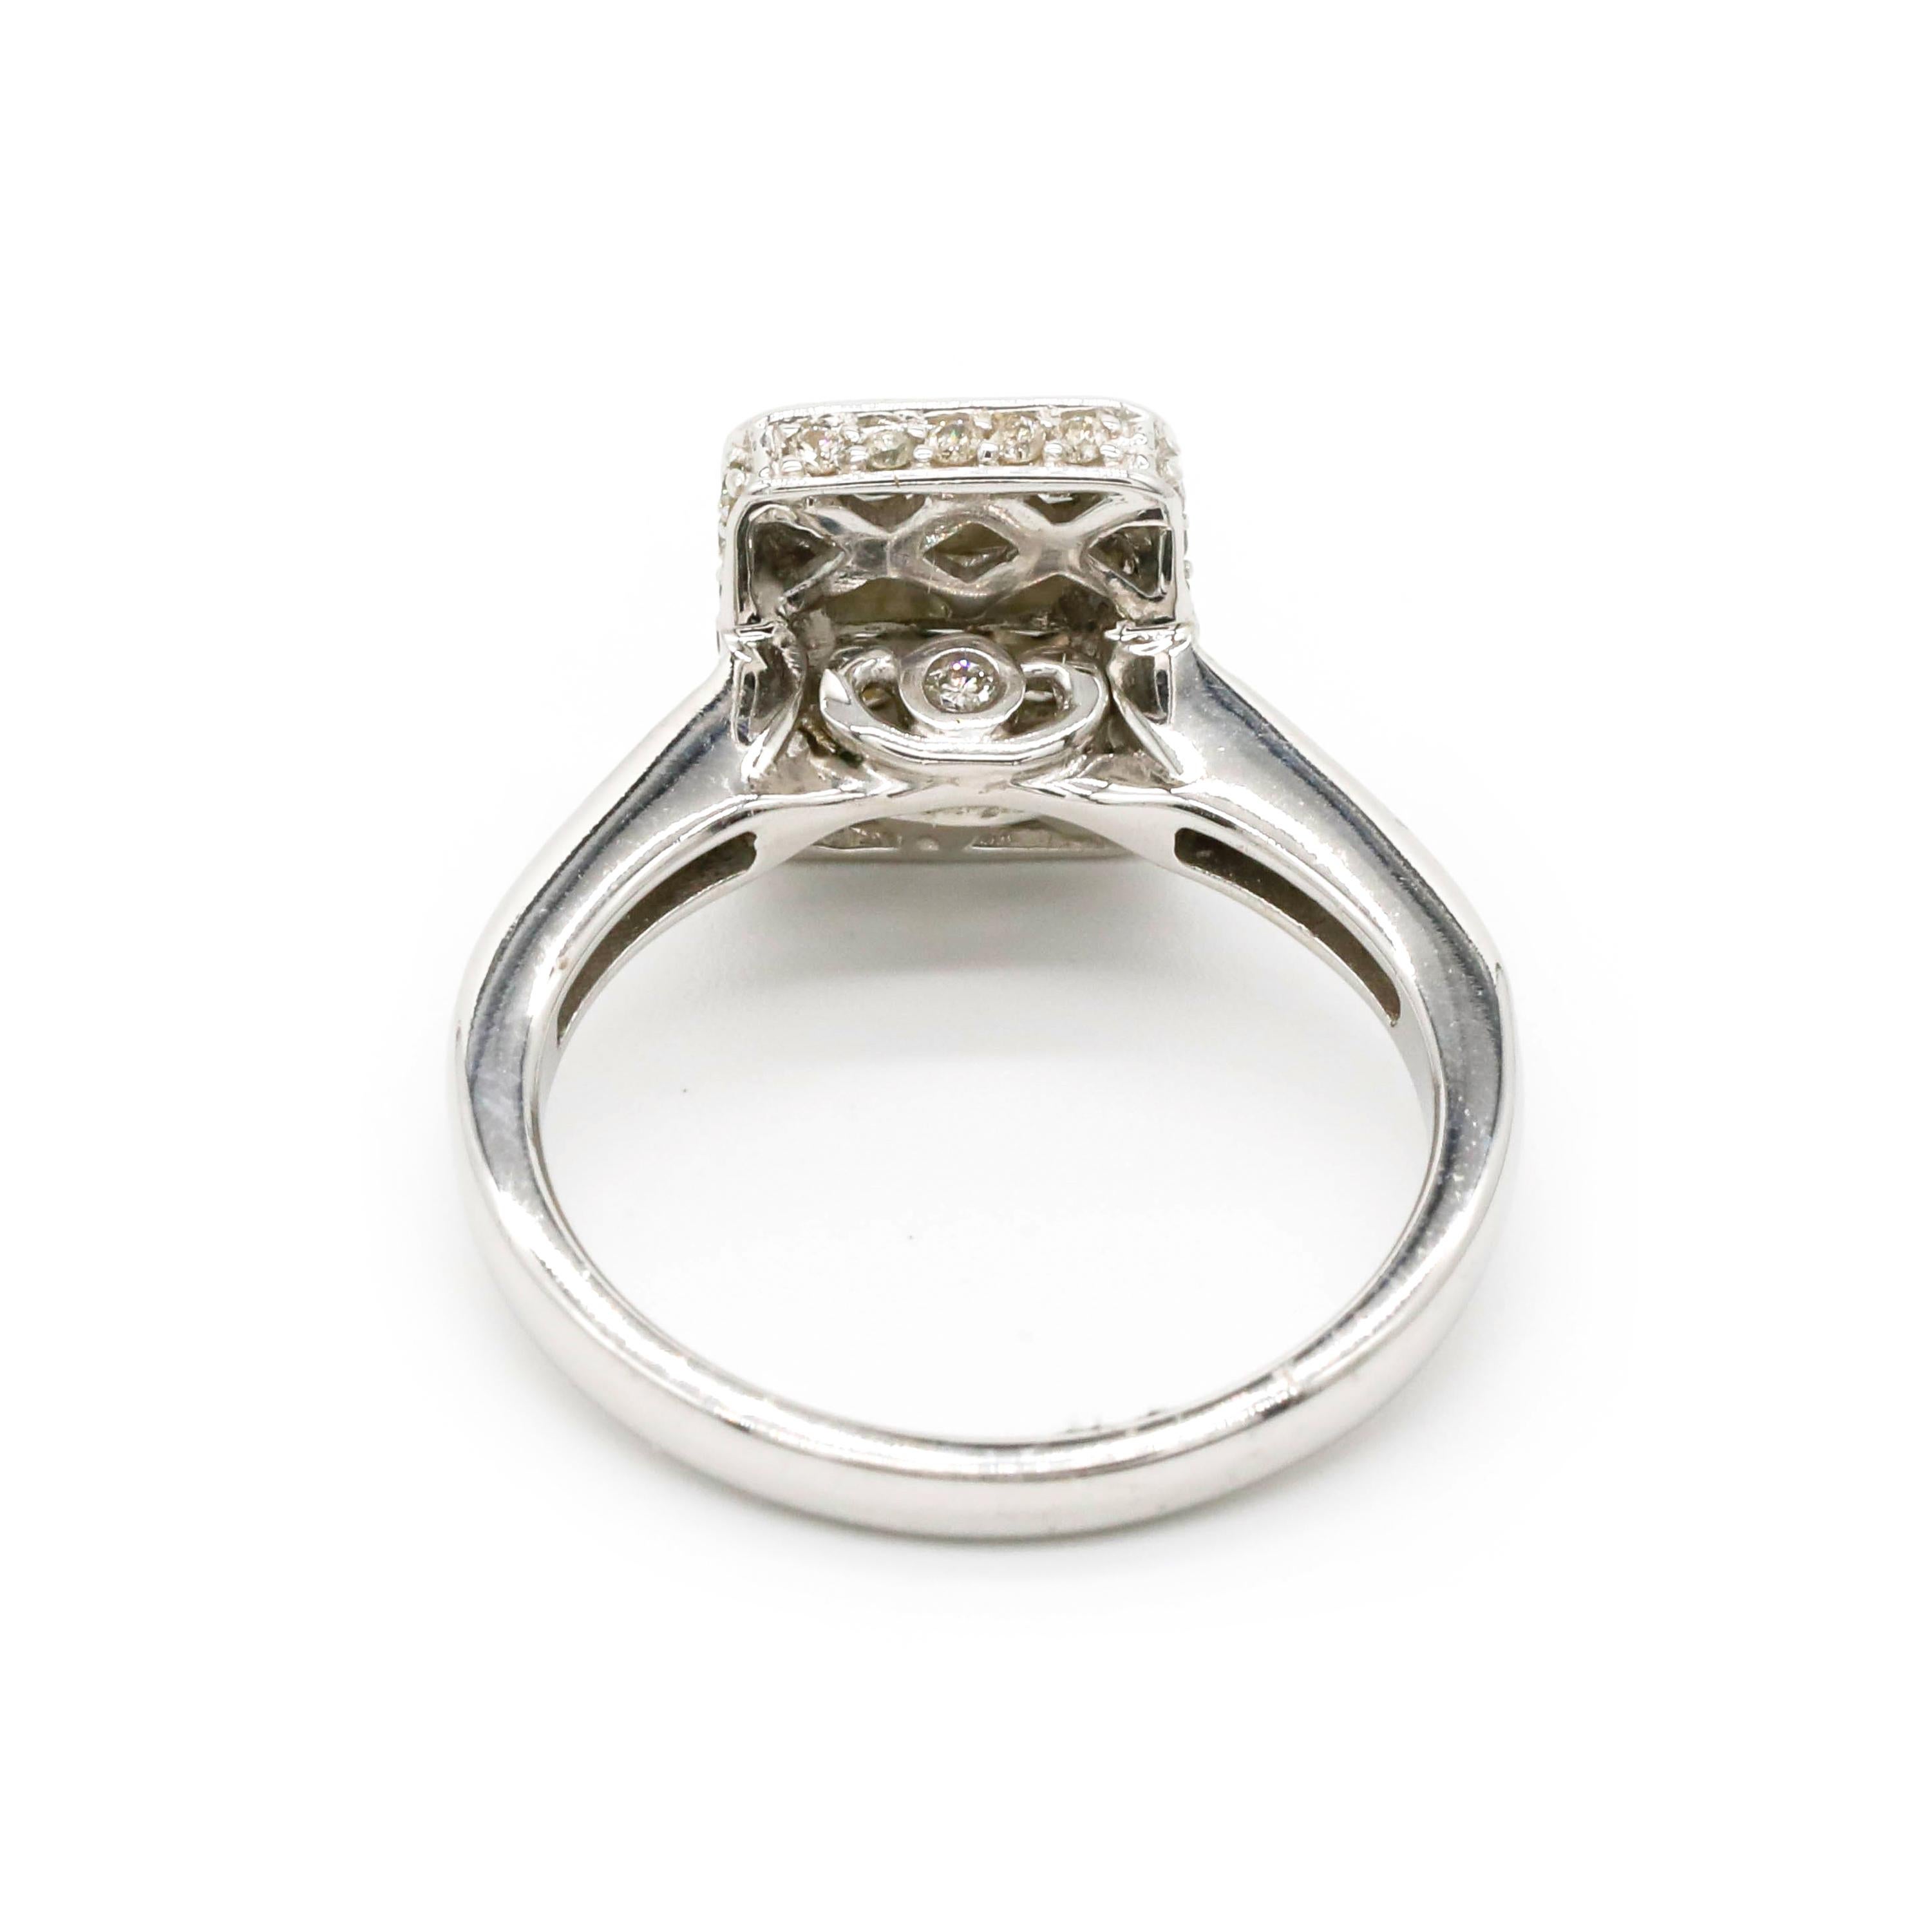 Gregg Ruth 18k White Gold 1.0 Carat Princess Cut Diamond Engagement Ring Sz 6.5 For Sale 1